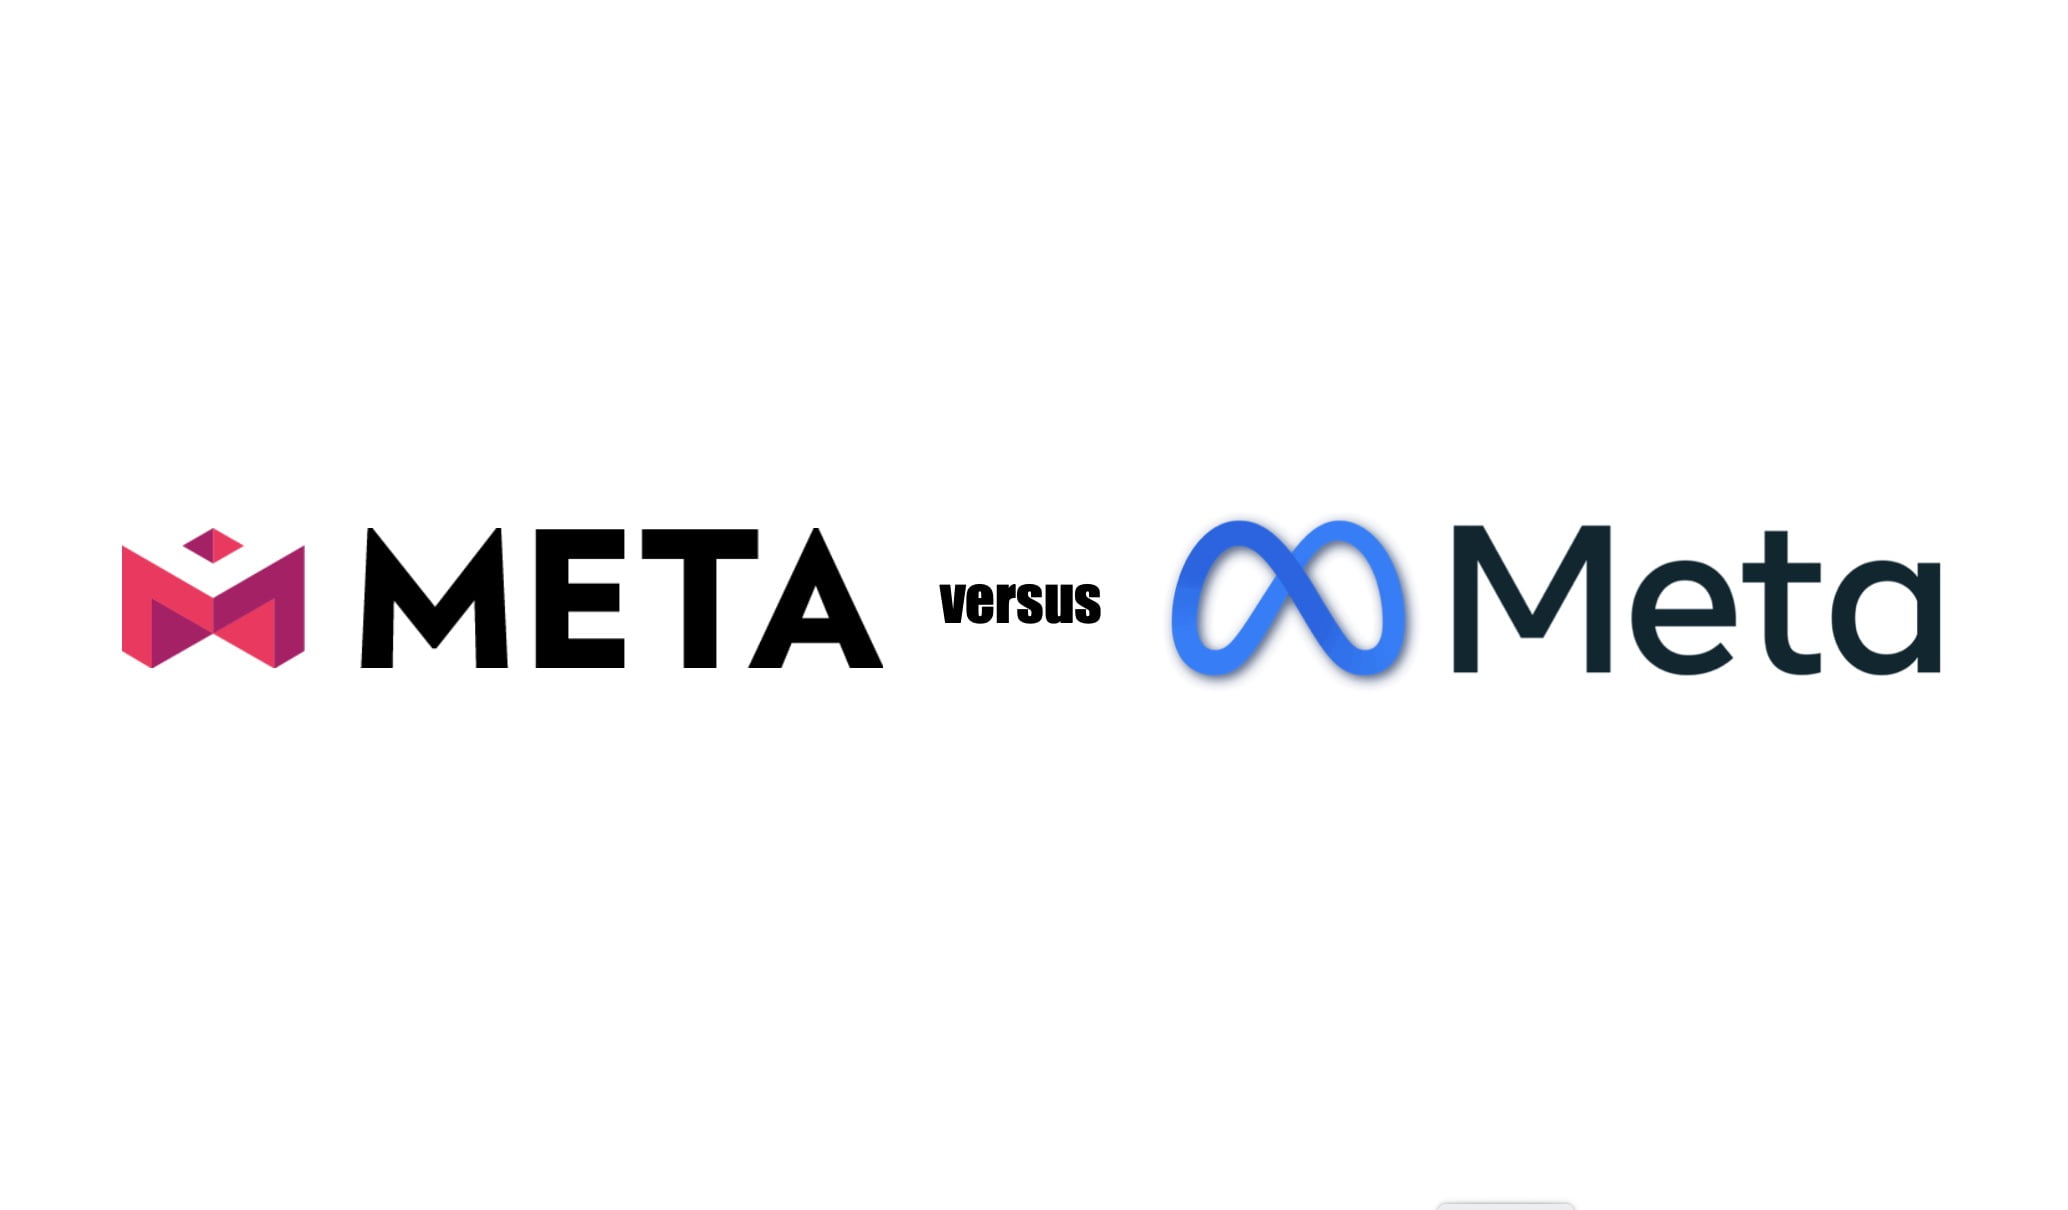 Meta sues Meta for trademark infringement